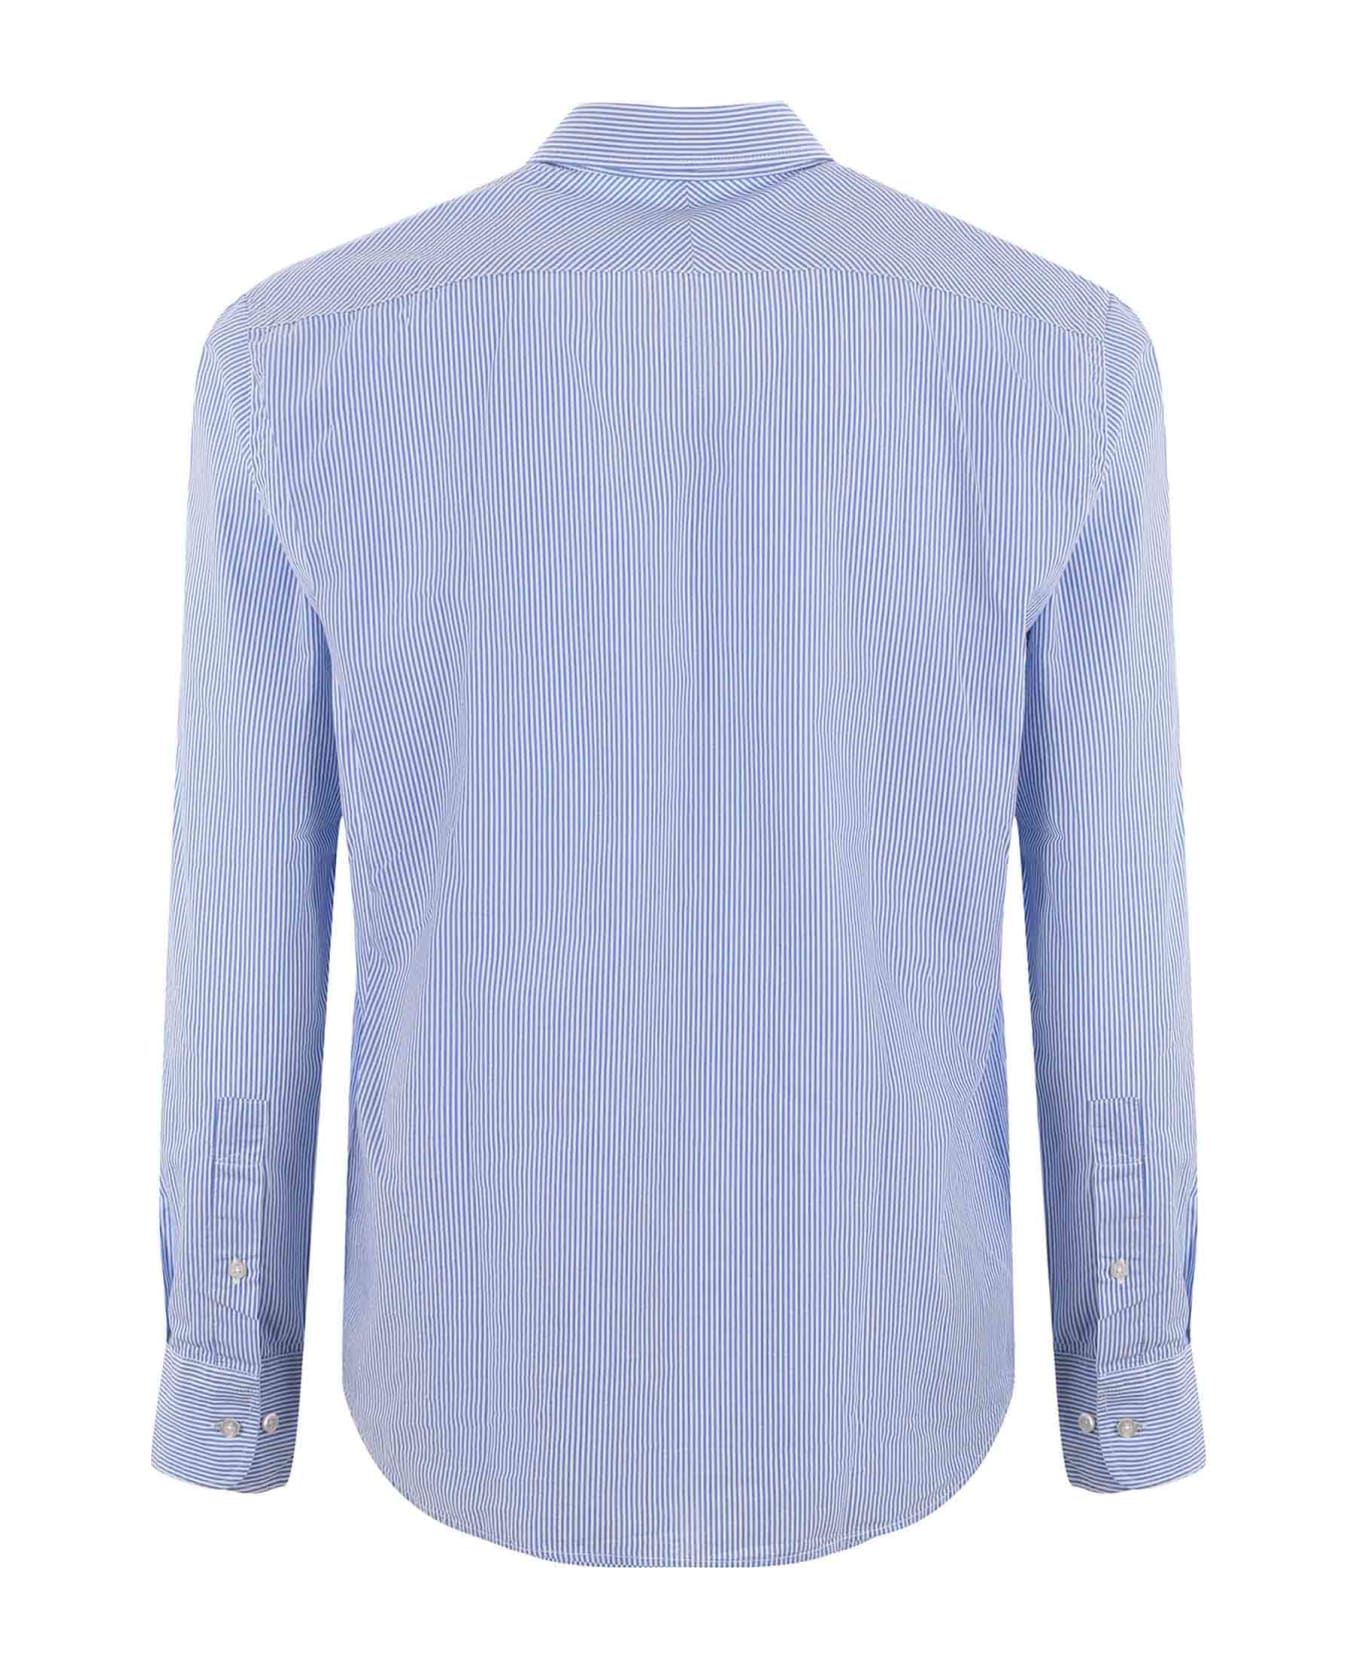 La Martina Shirt - Azzurro/Bianco